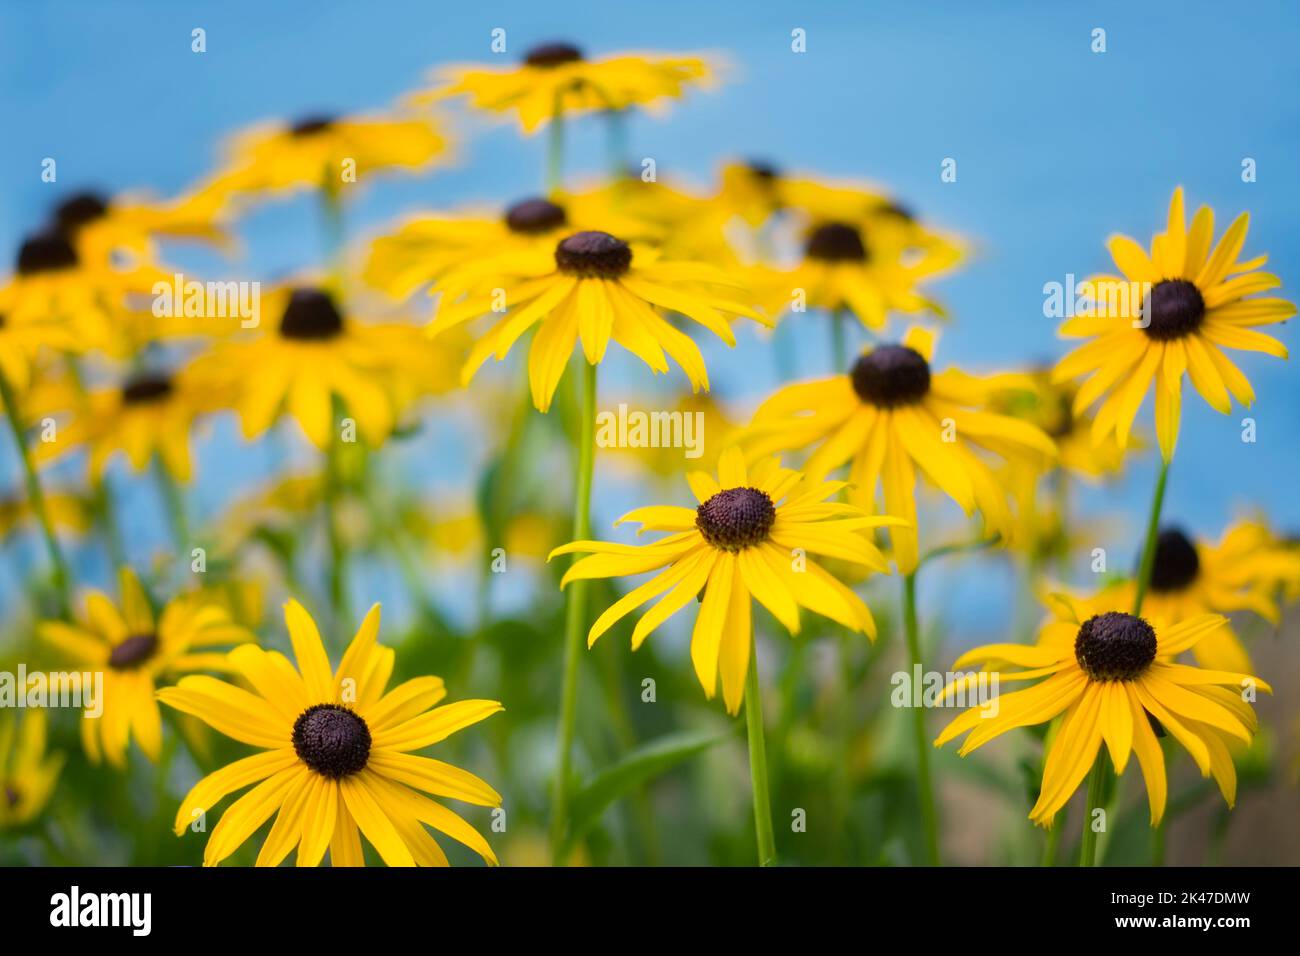 Black Eyed Susan flowers (Rudbeckia fulgida) Stock Photo